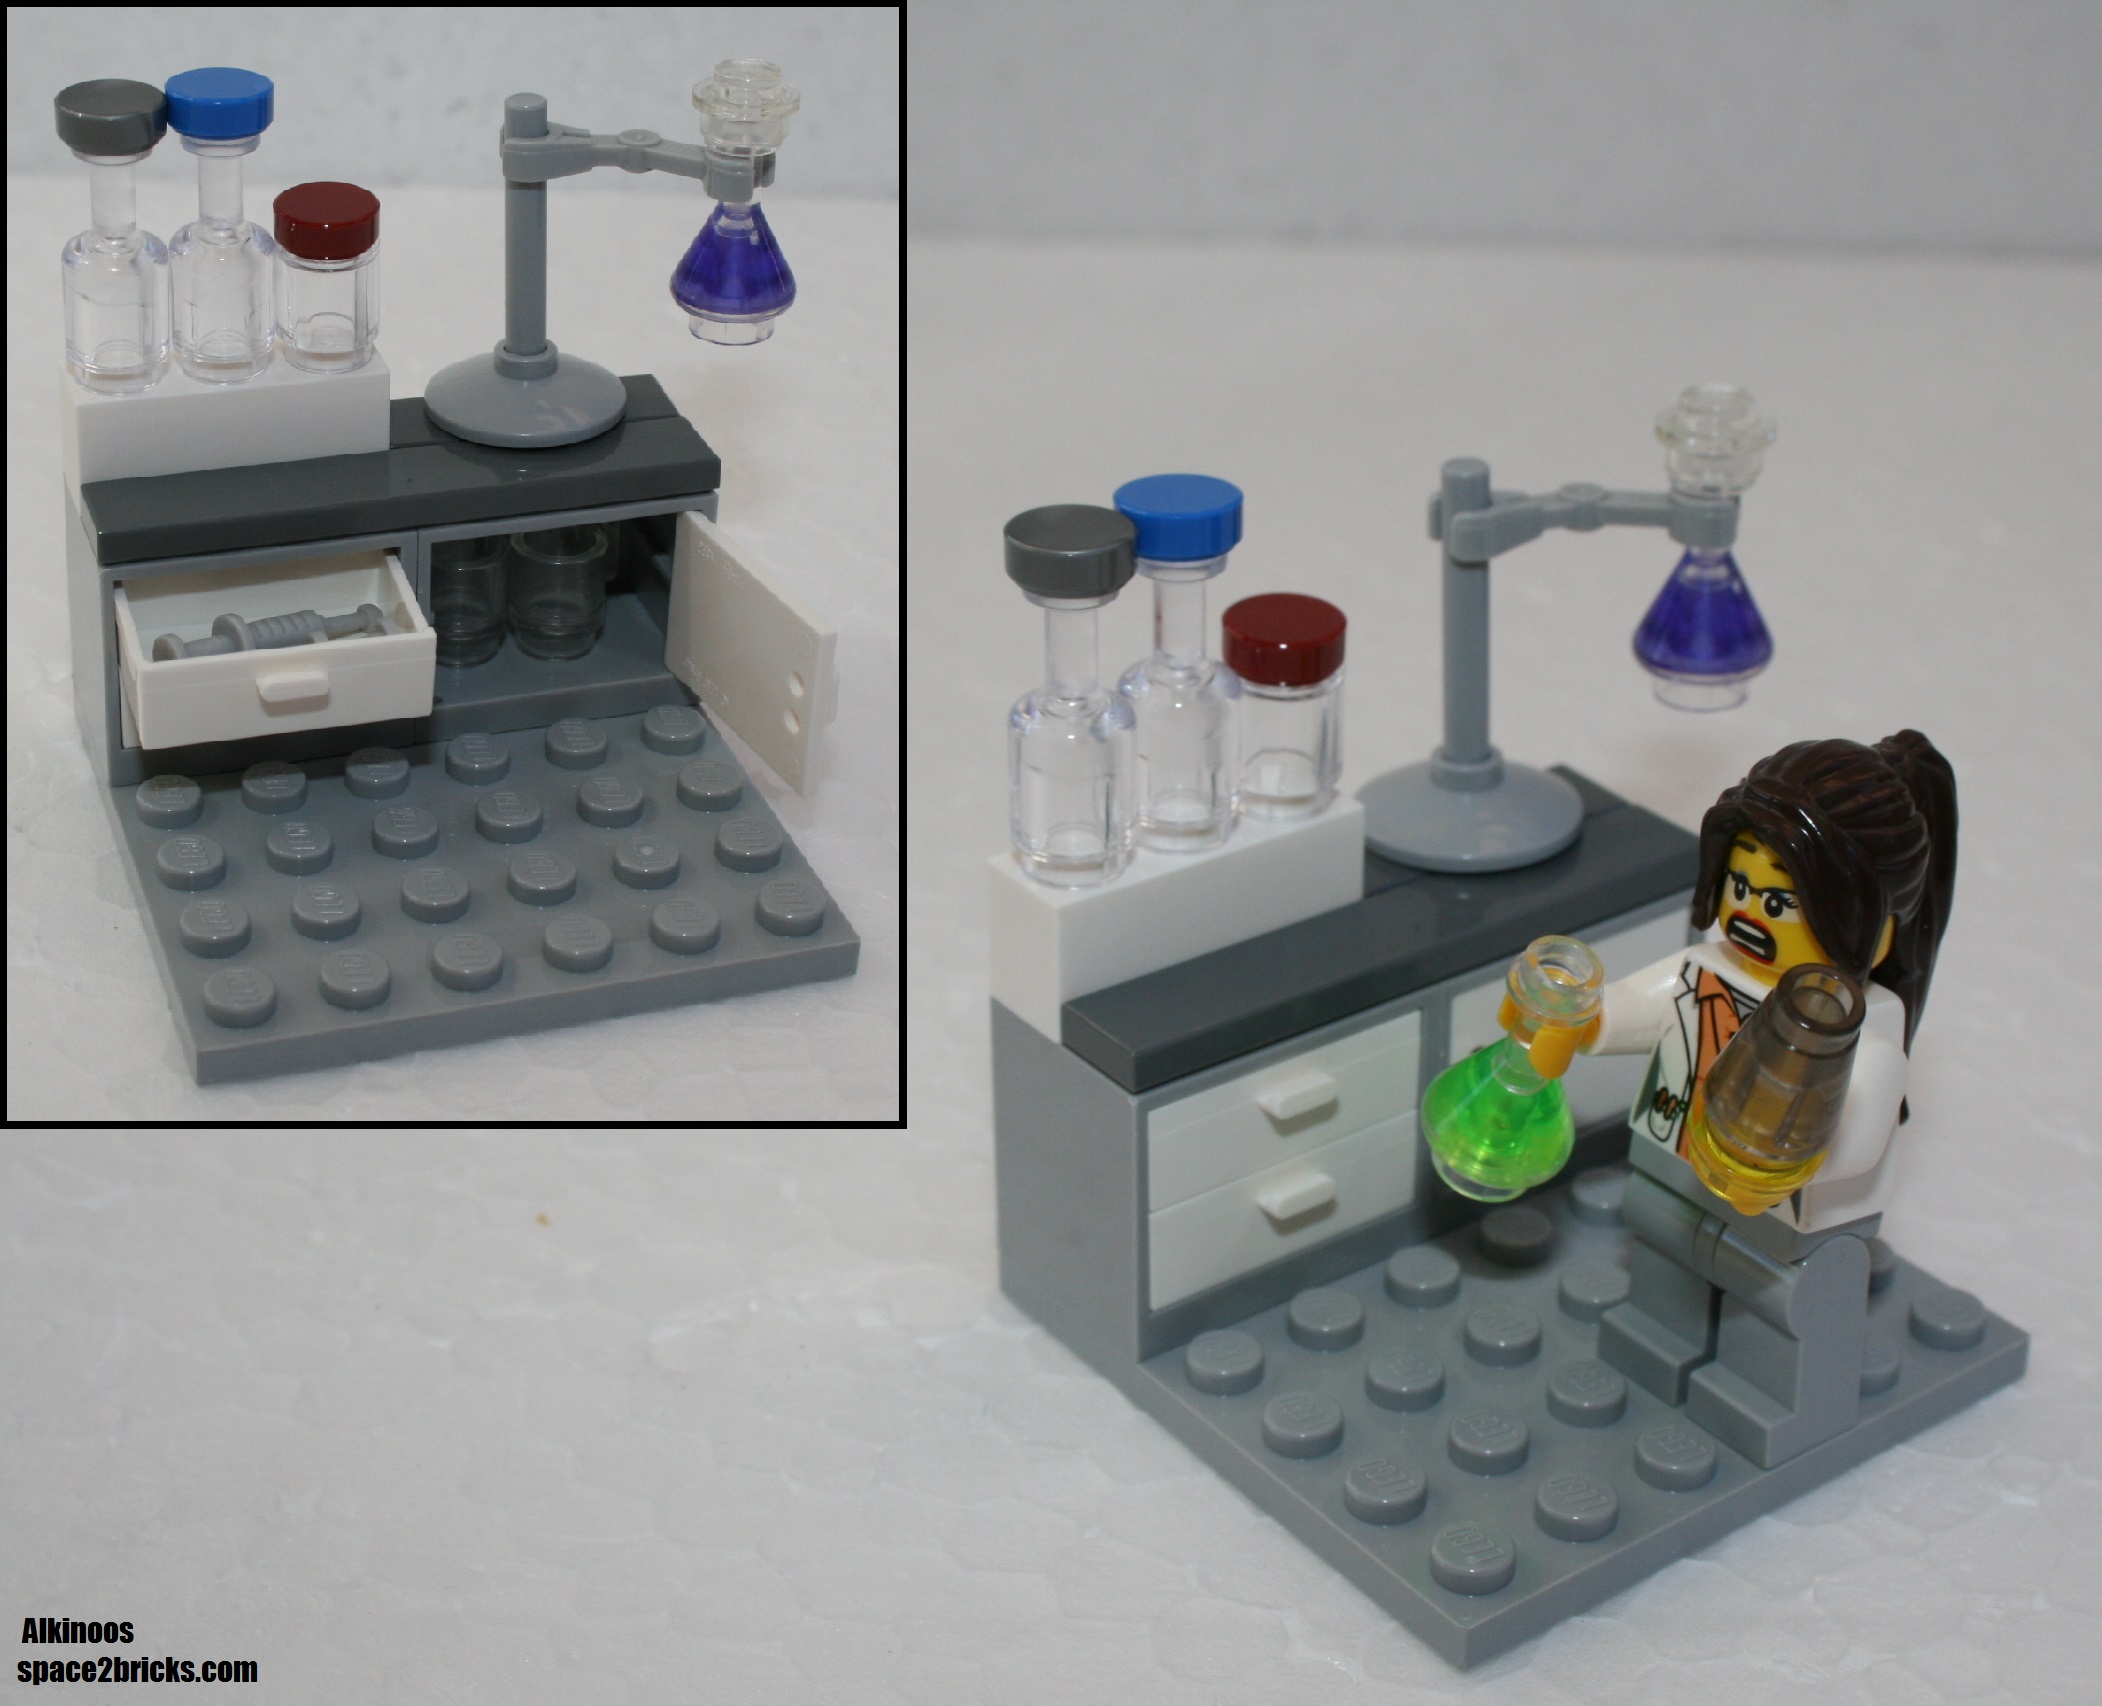 L'Institut de recherches Lego de Lego